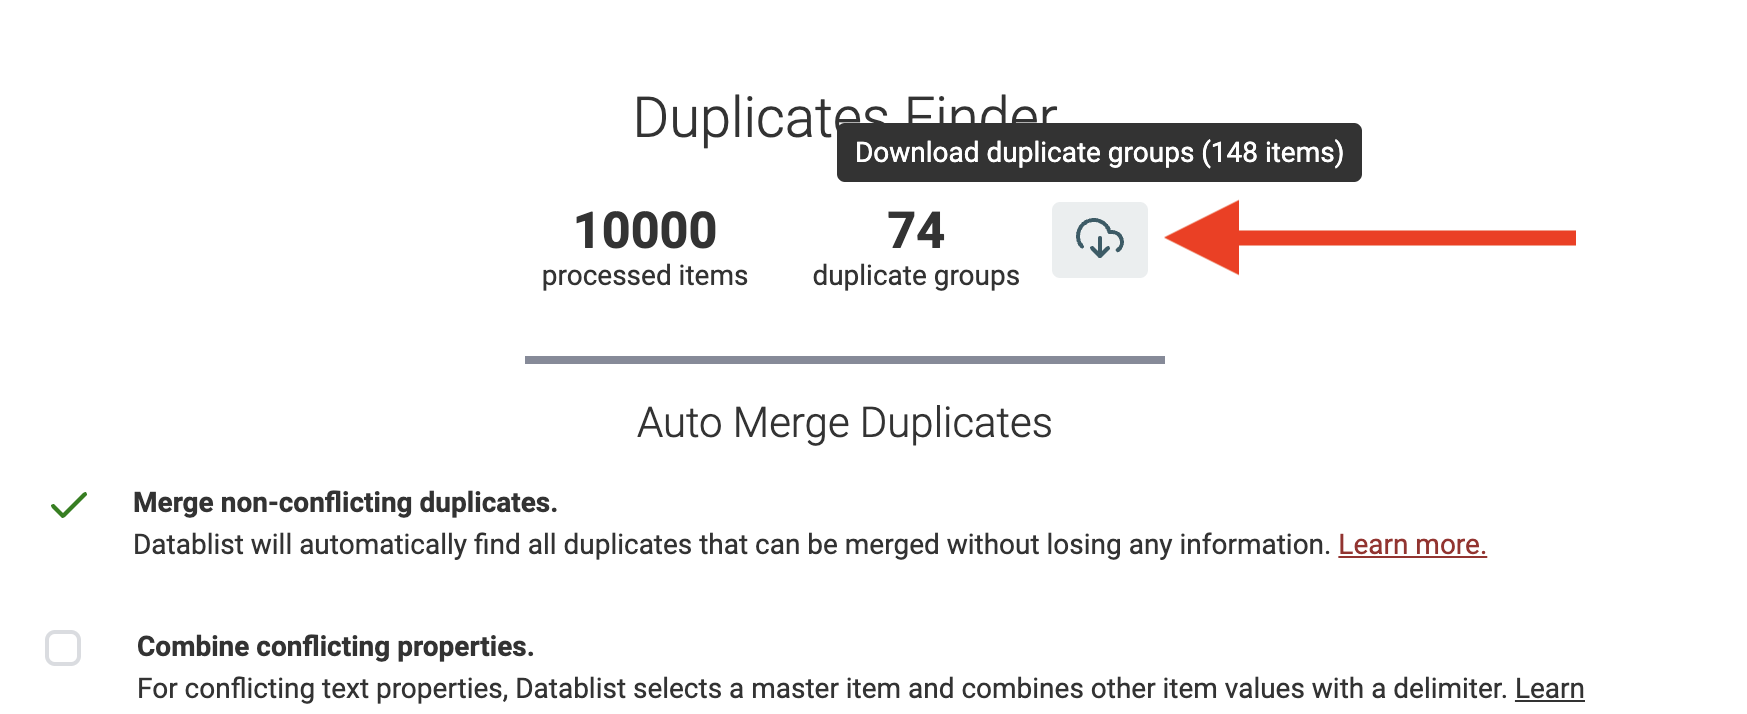 Download duplicate groups